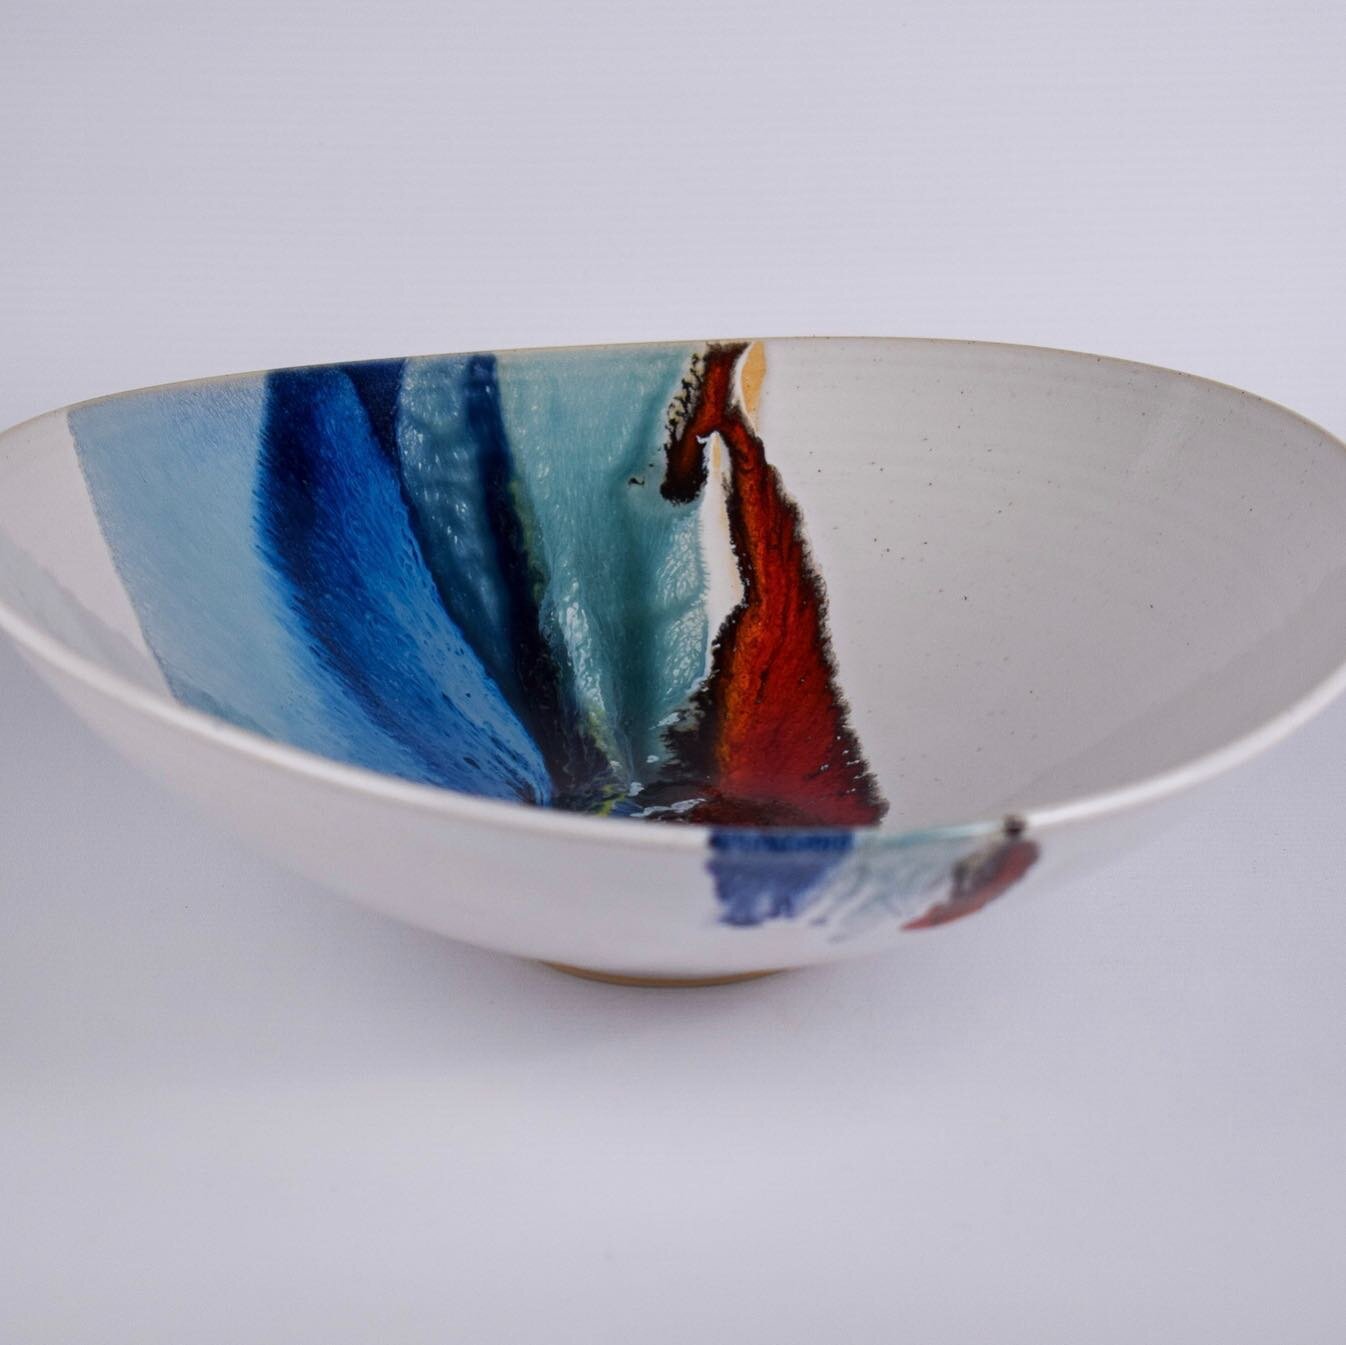 Multicolour Glaze Footed Bowl  https://www.davidmellordesign.com/craft-pottery-and-woodware/craft-pottery-ranges/michael-taylor-bowls/multicolour-glaze-footed-bowl-315mm-michael-taylor  #michael_taylor_ceramics #contemporaryceramics #wheelthrown #mod